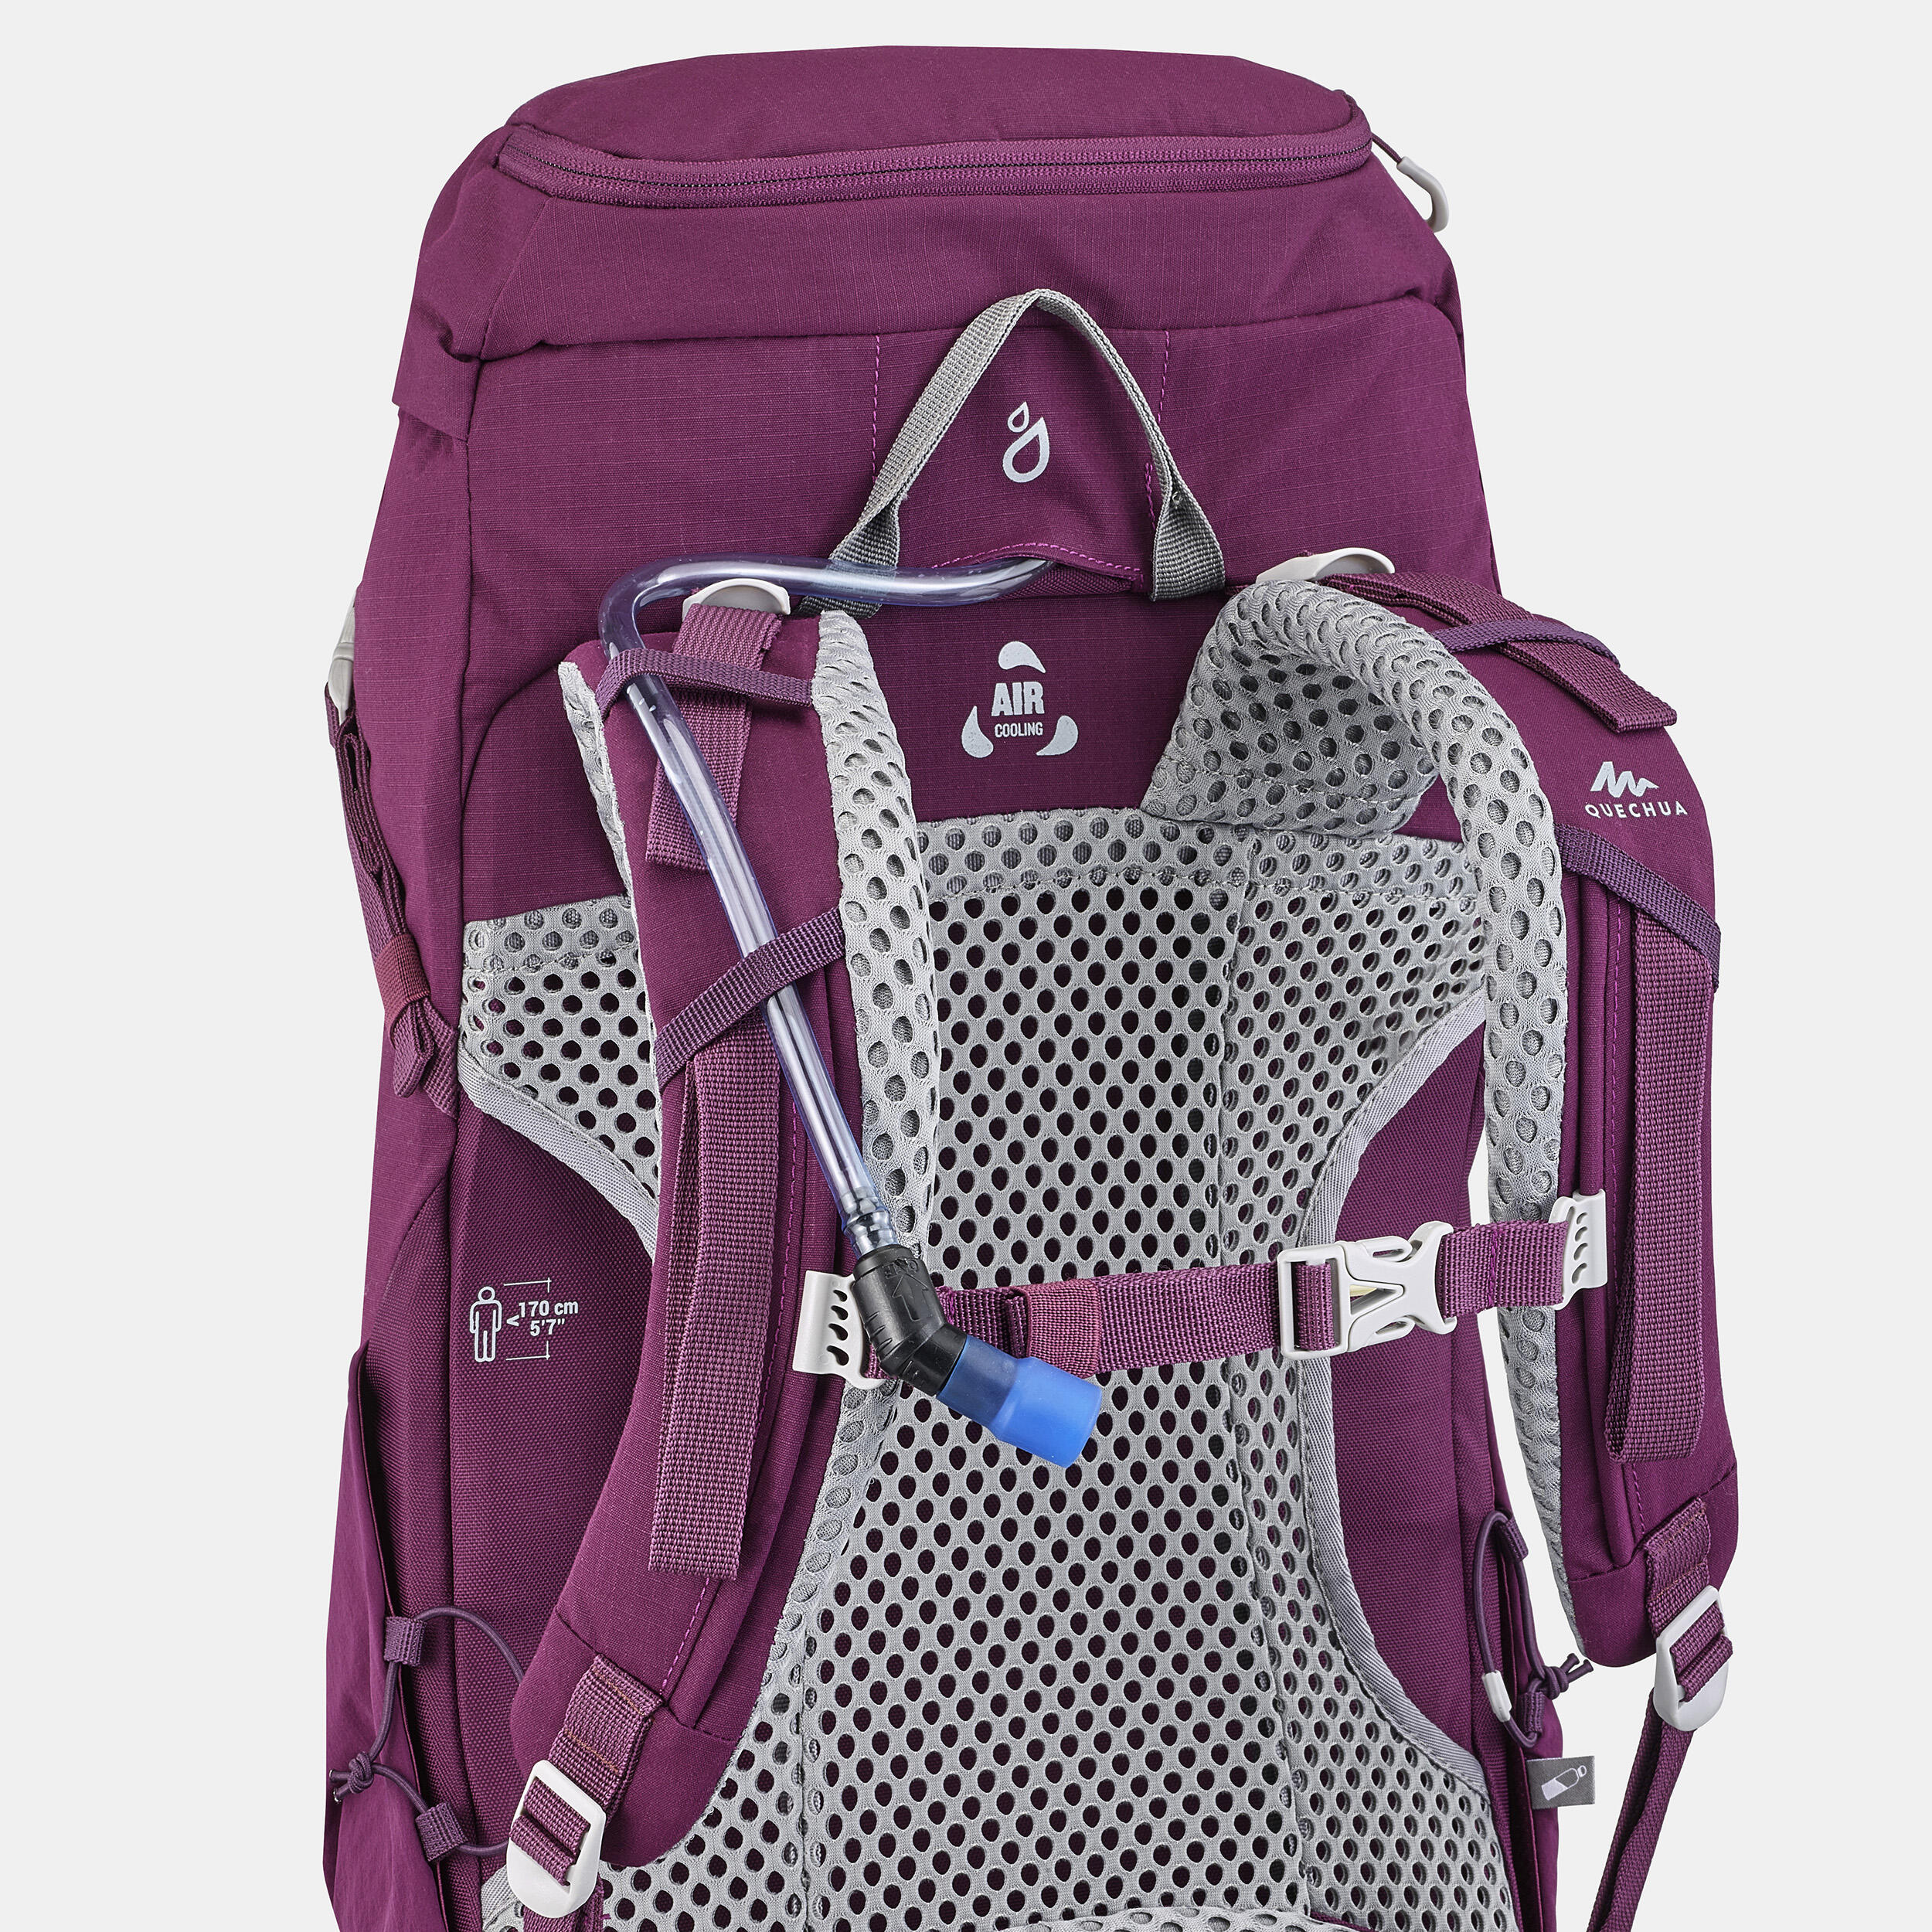 Hiking Backpack 20 L - MH 500 Purple - QUECHUA